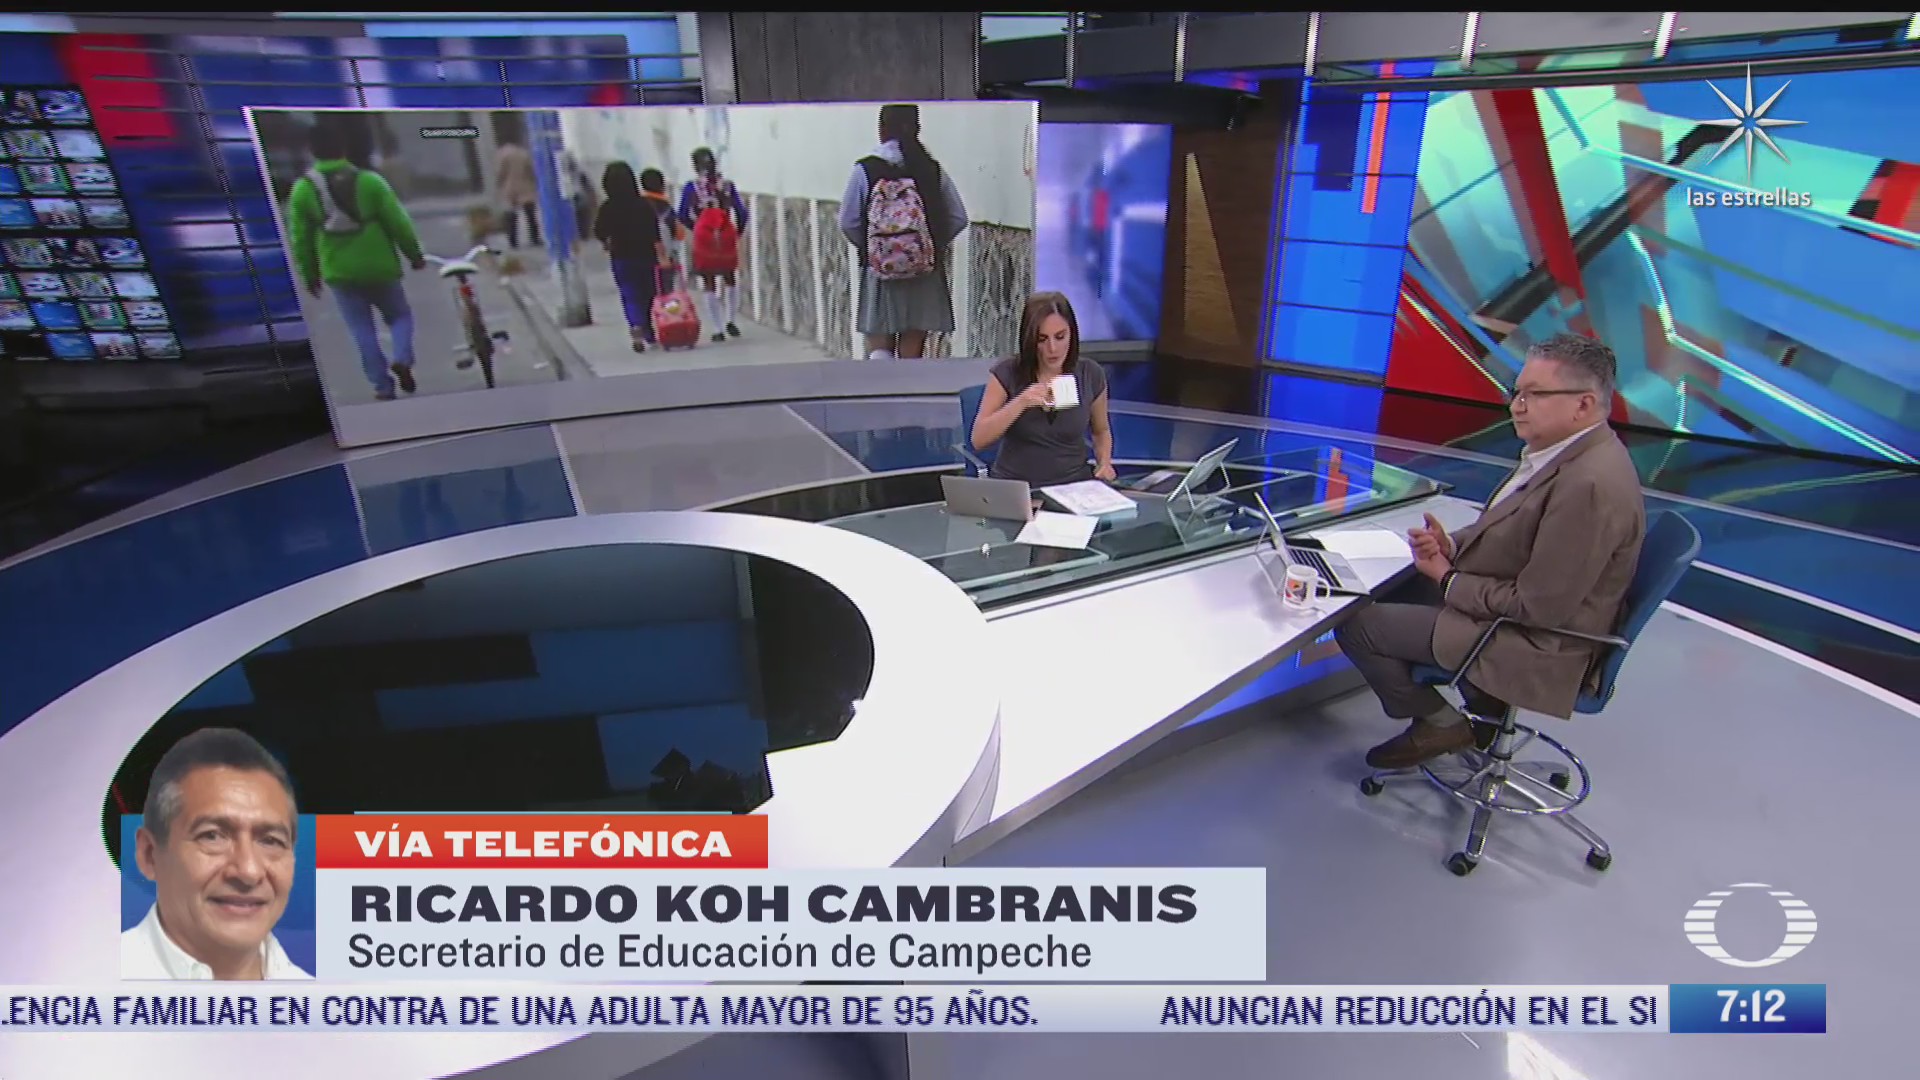 entrevista a ricardo koh cambranis secretario de educacion en campeche